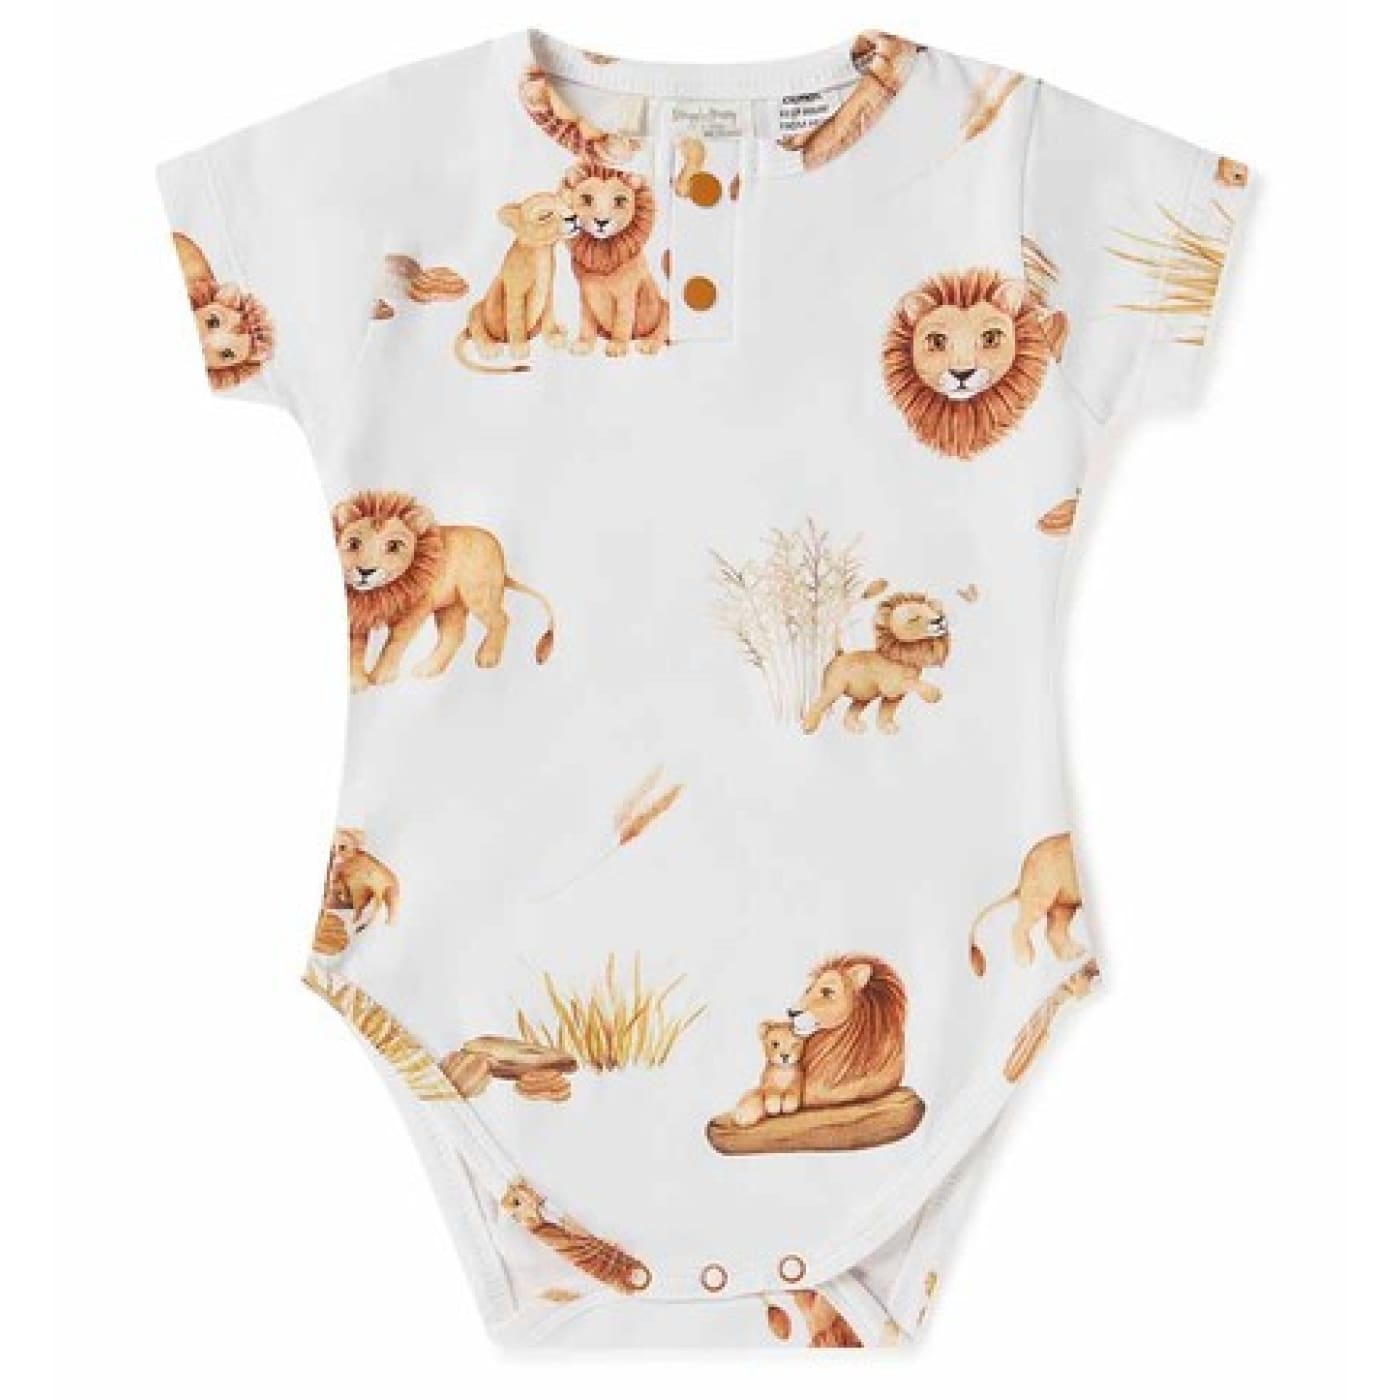 Snuggle Hunny Kids Short Sleeve Bodysuit - Lion 0-3M - 0-3M / Lion - BABY & TODDLER CLOTHING - BODYSUITS/SETS/MIX-MATCH